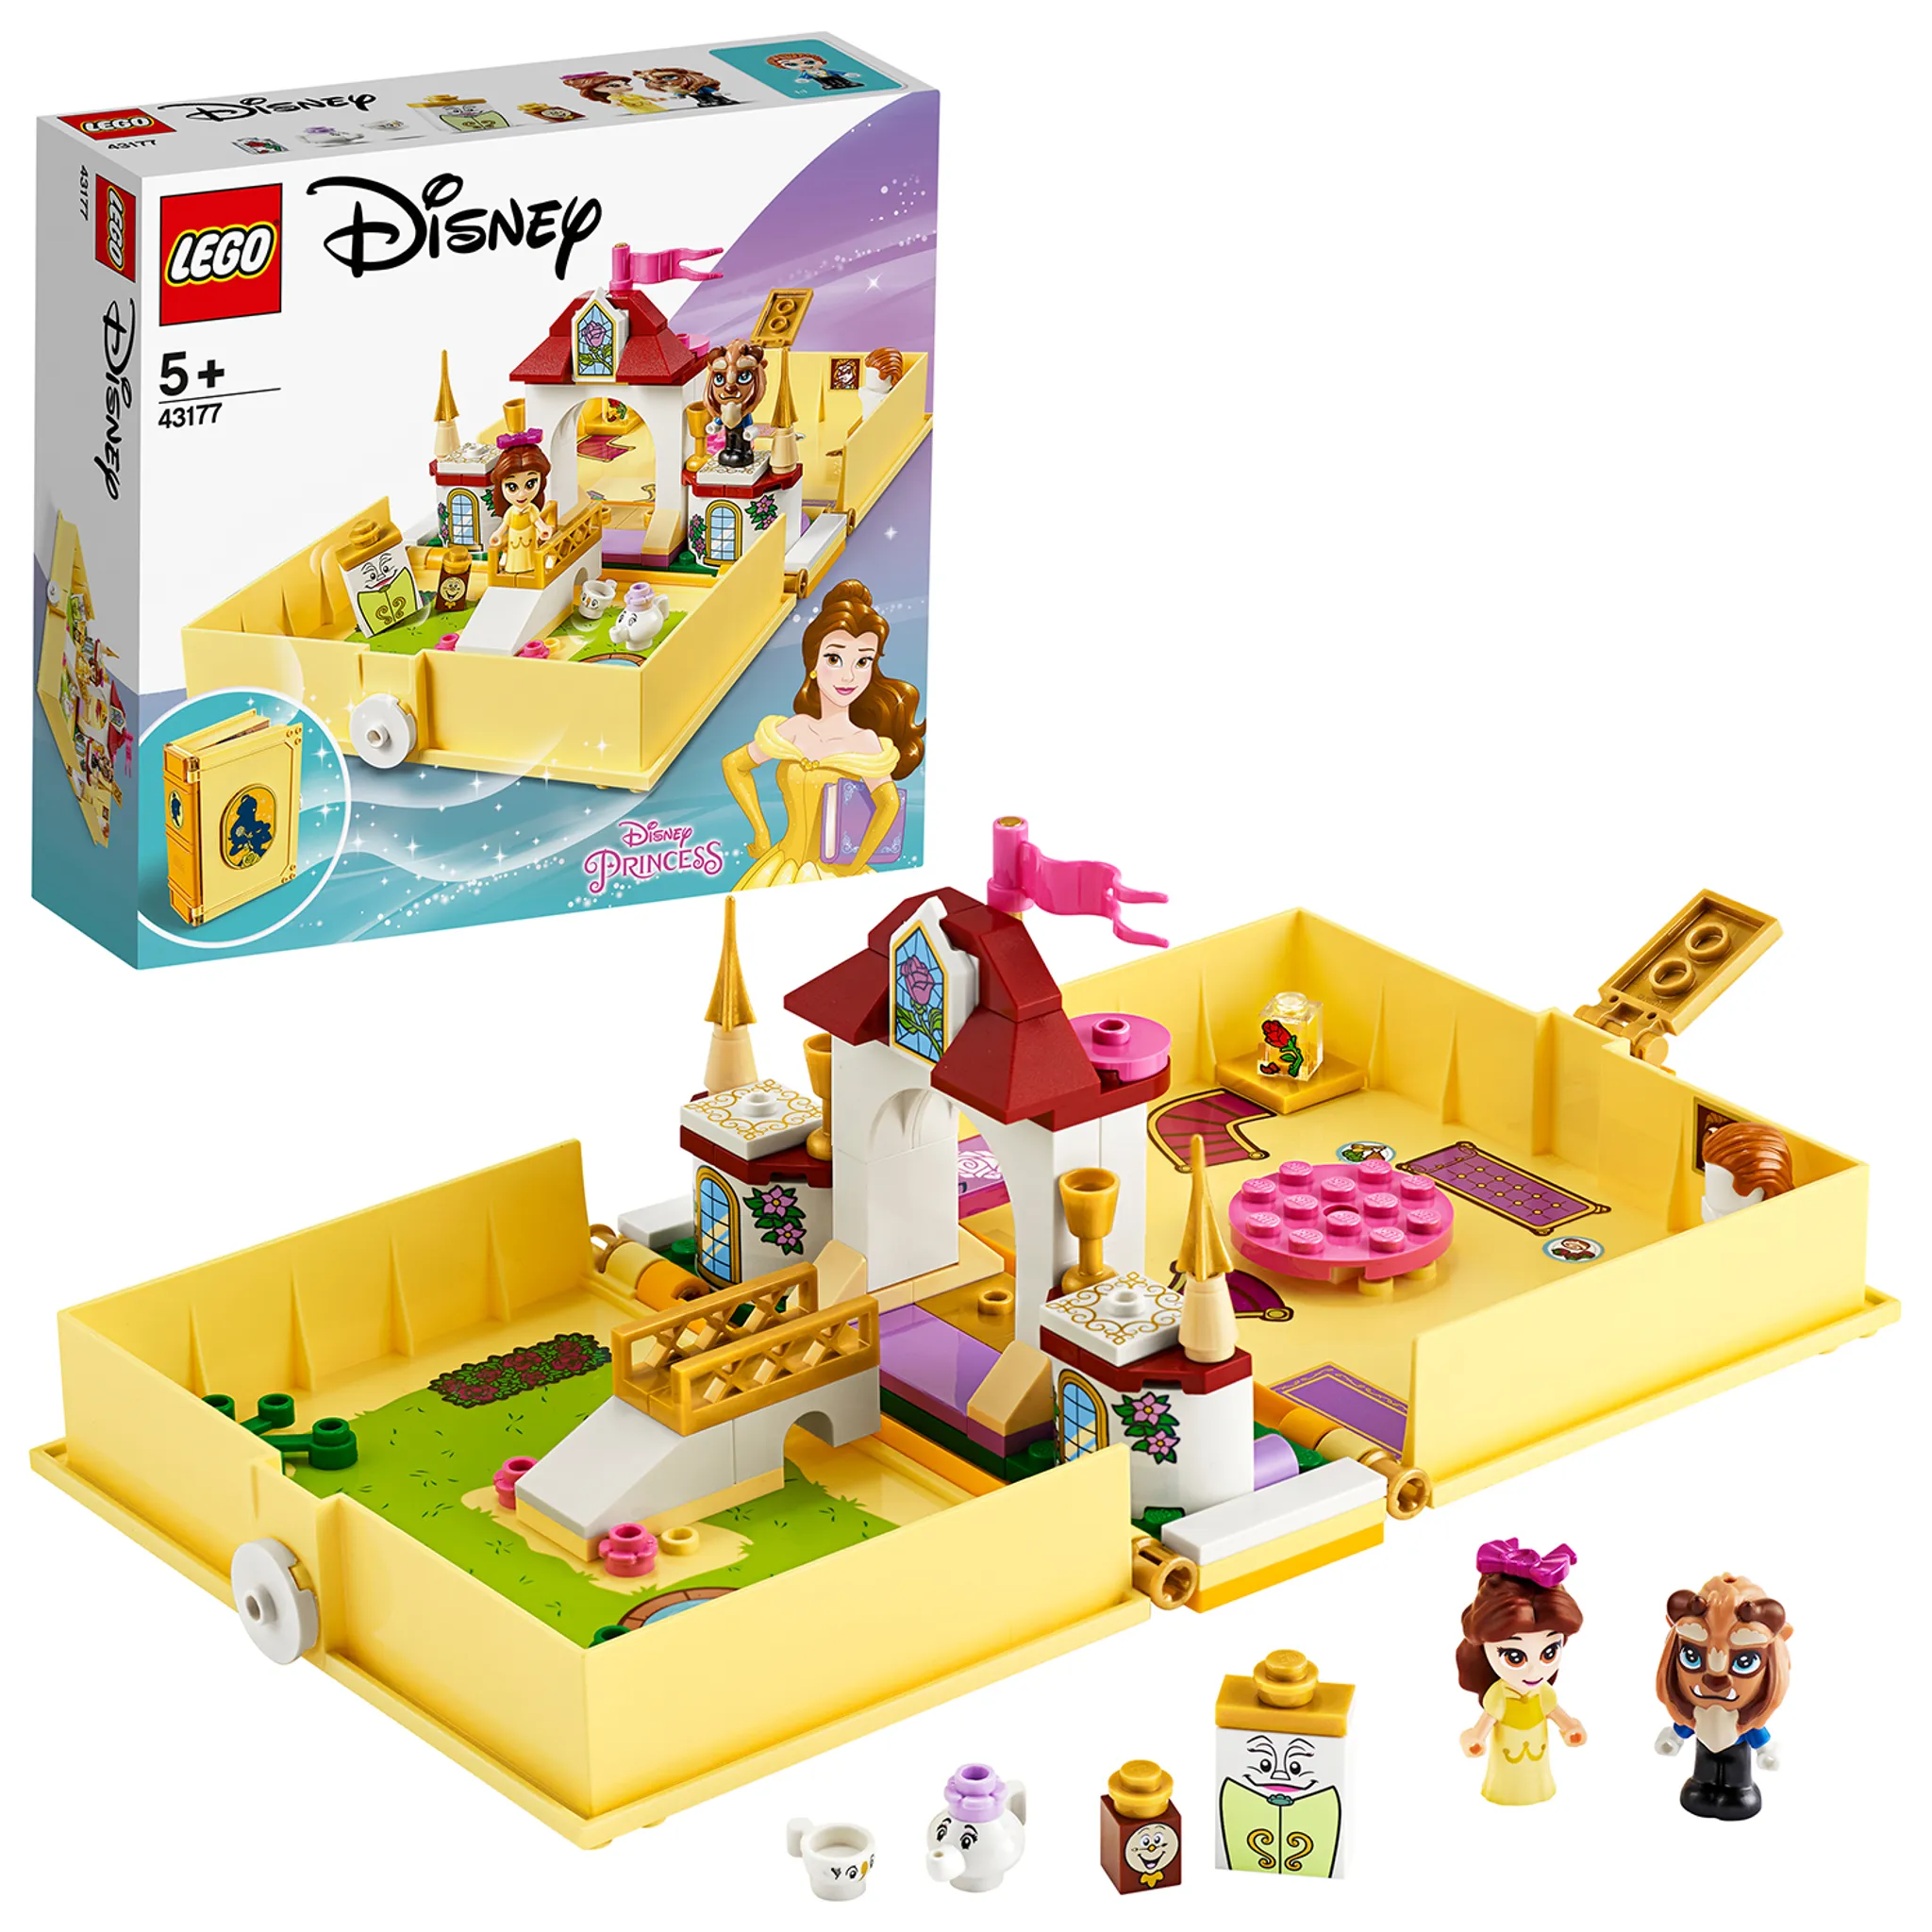 Disney LEGO Belles 43177 Princess